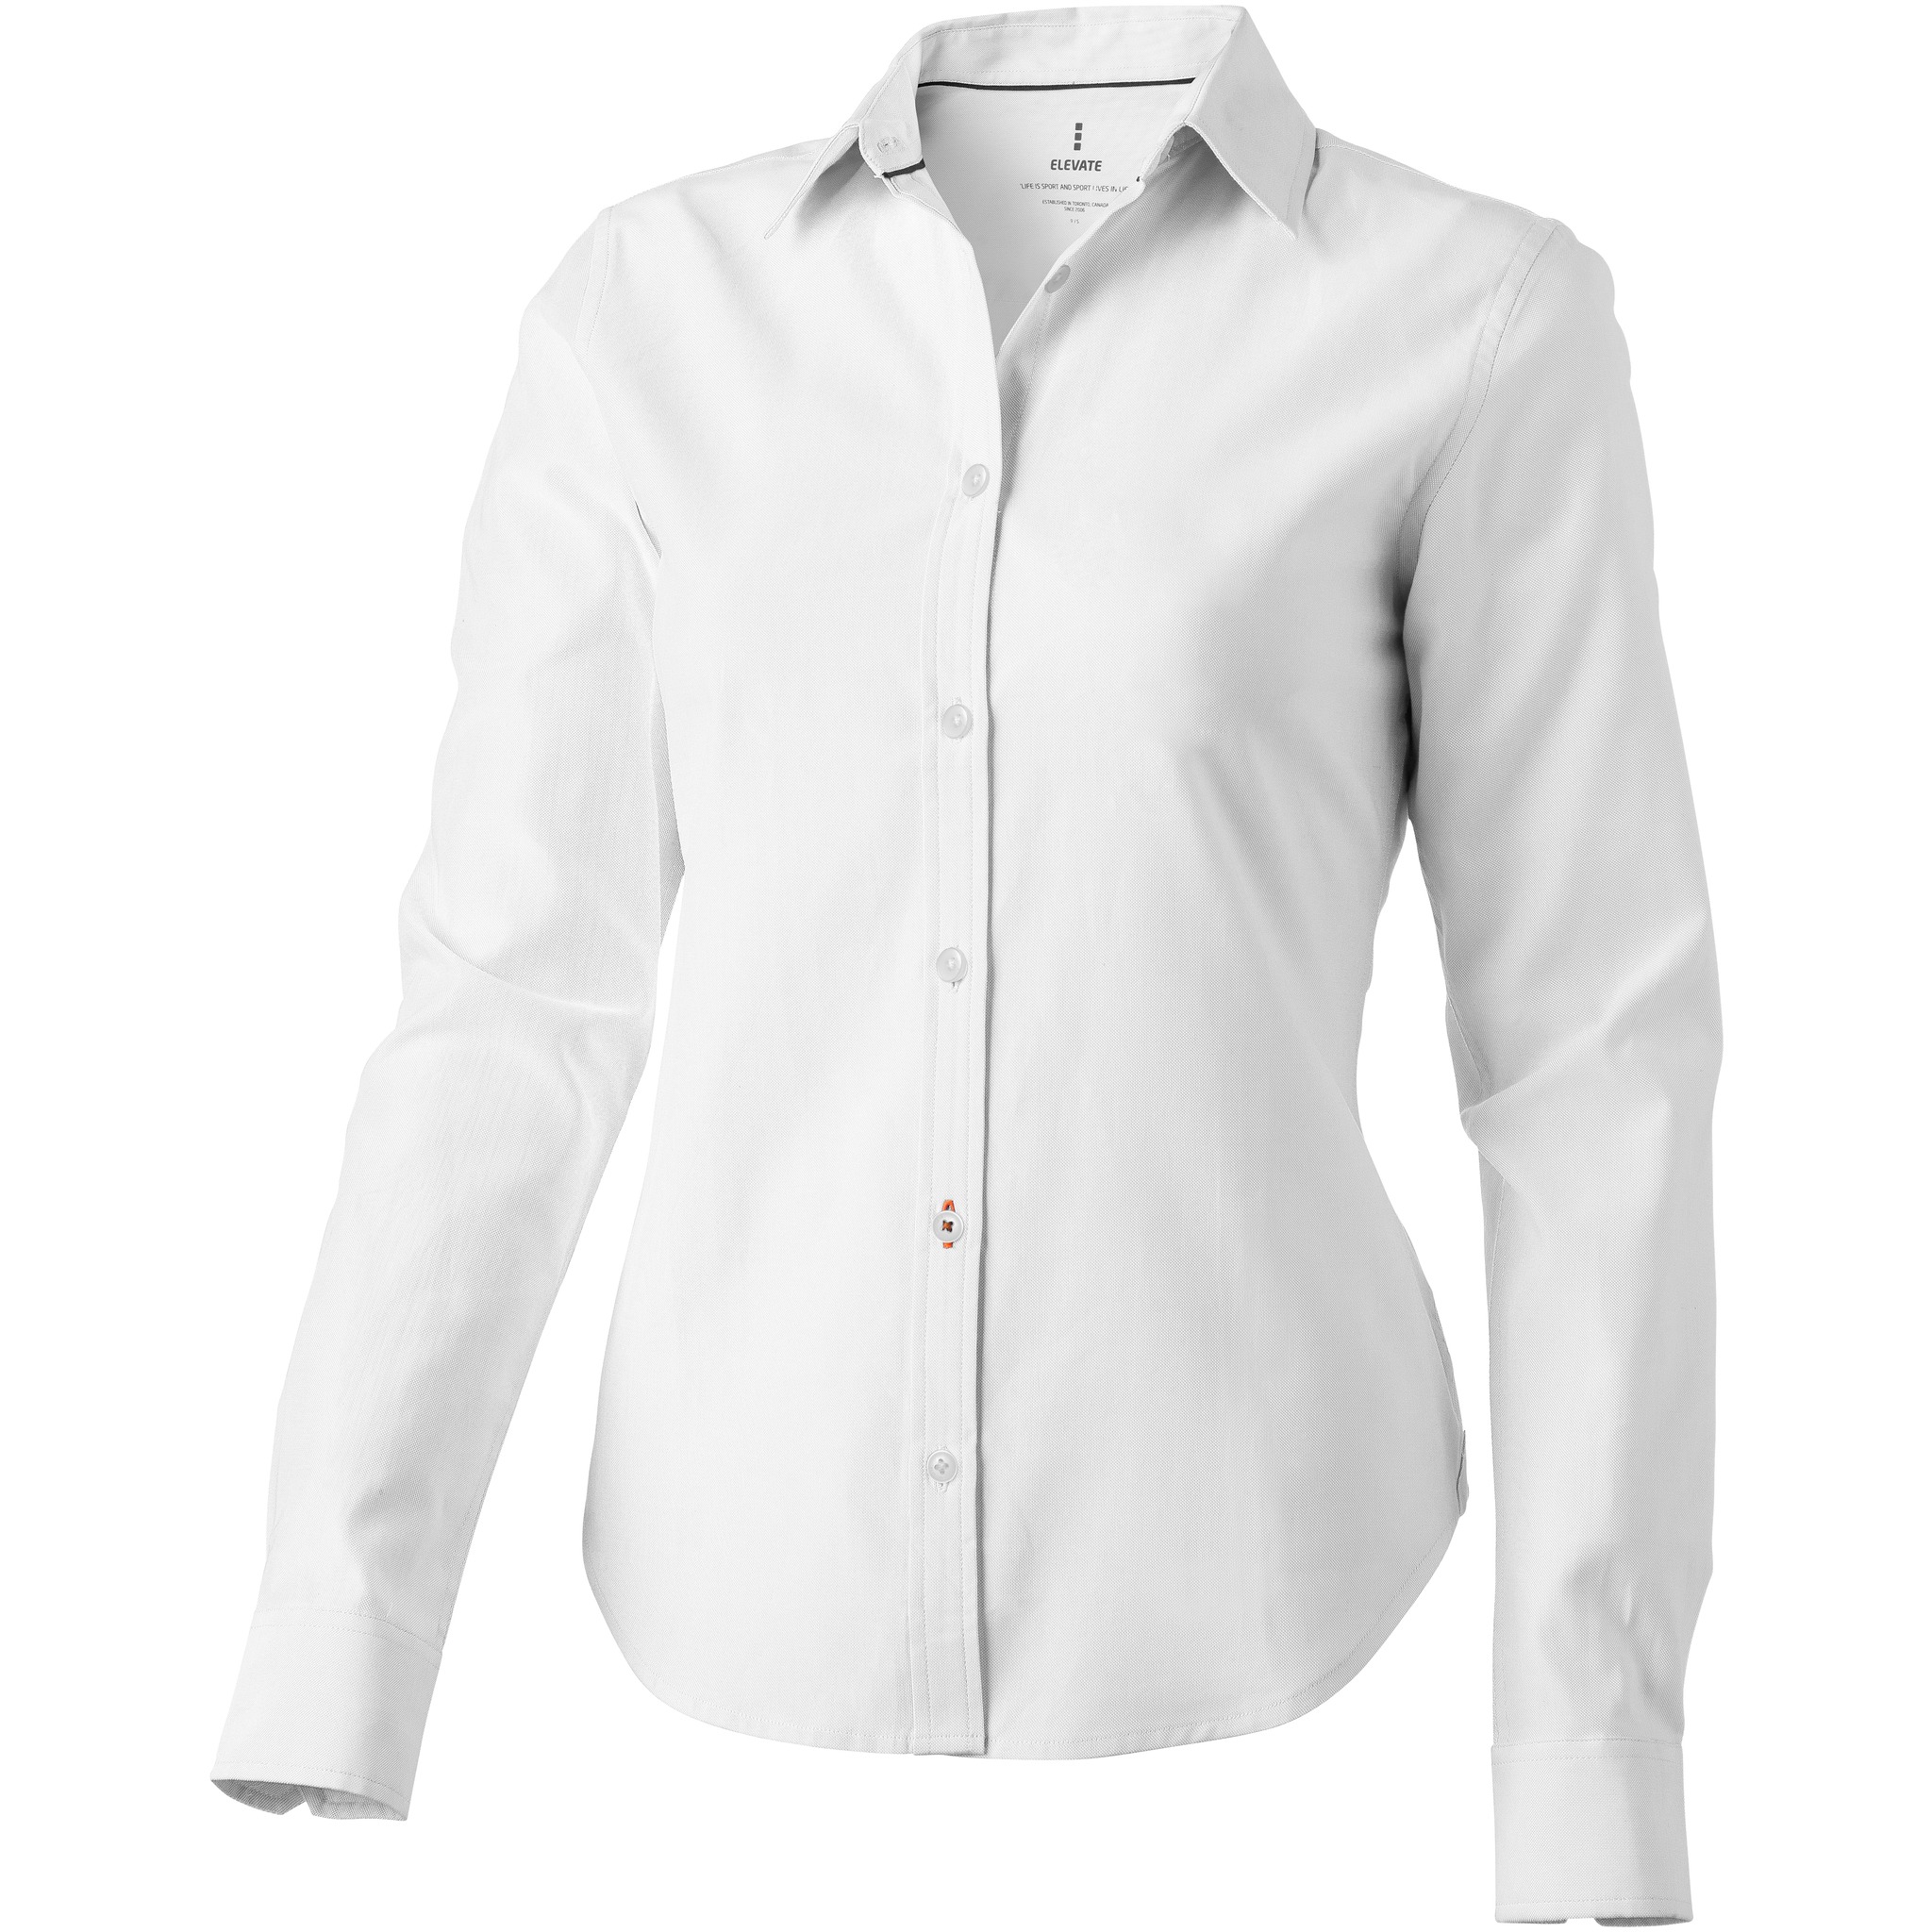 Vaillant long sleeve ladies shirt, white. 